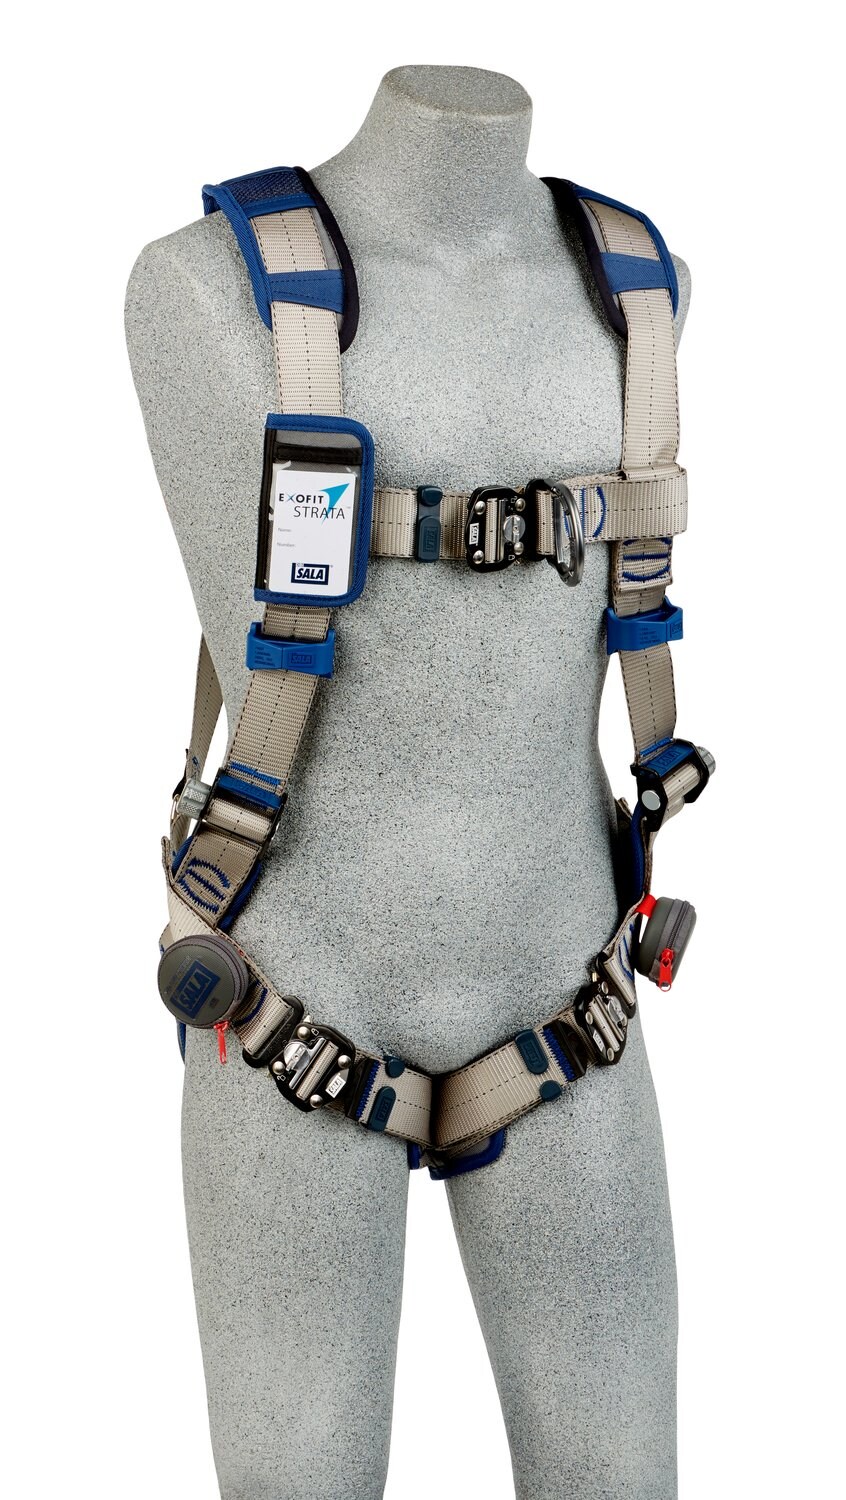 7012815965 - 3M DBI-SALA ExoFit STRATA Comfort Vest Climbing Safety Harness 1112506, Medium